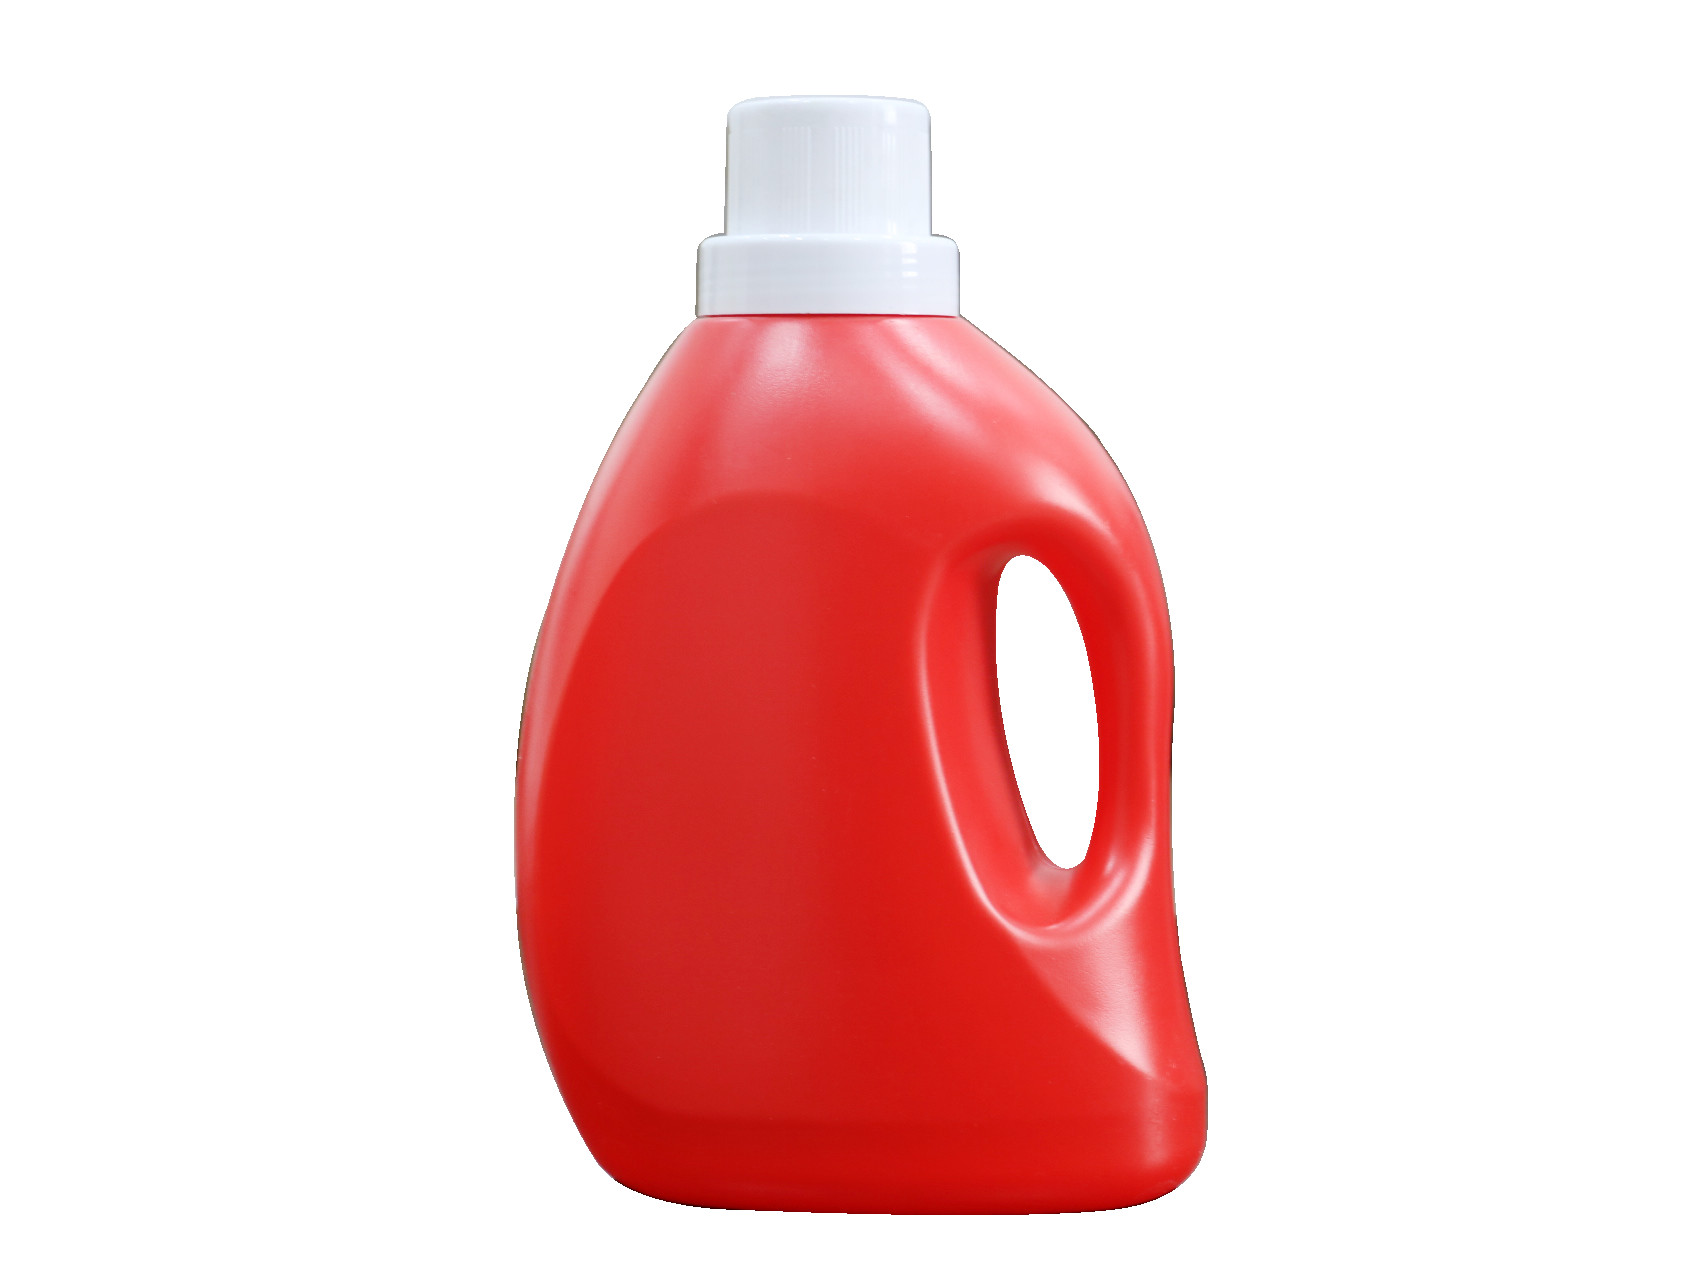 Laundry liquid bottle